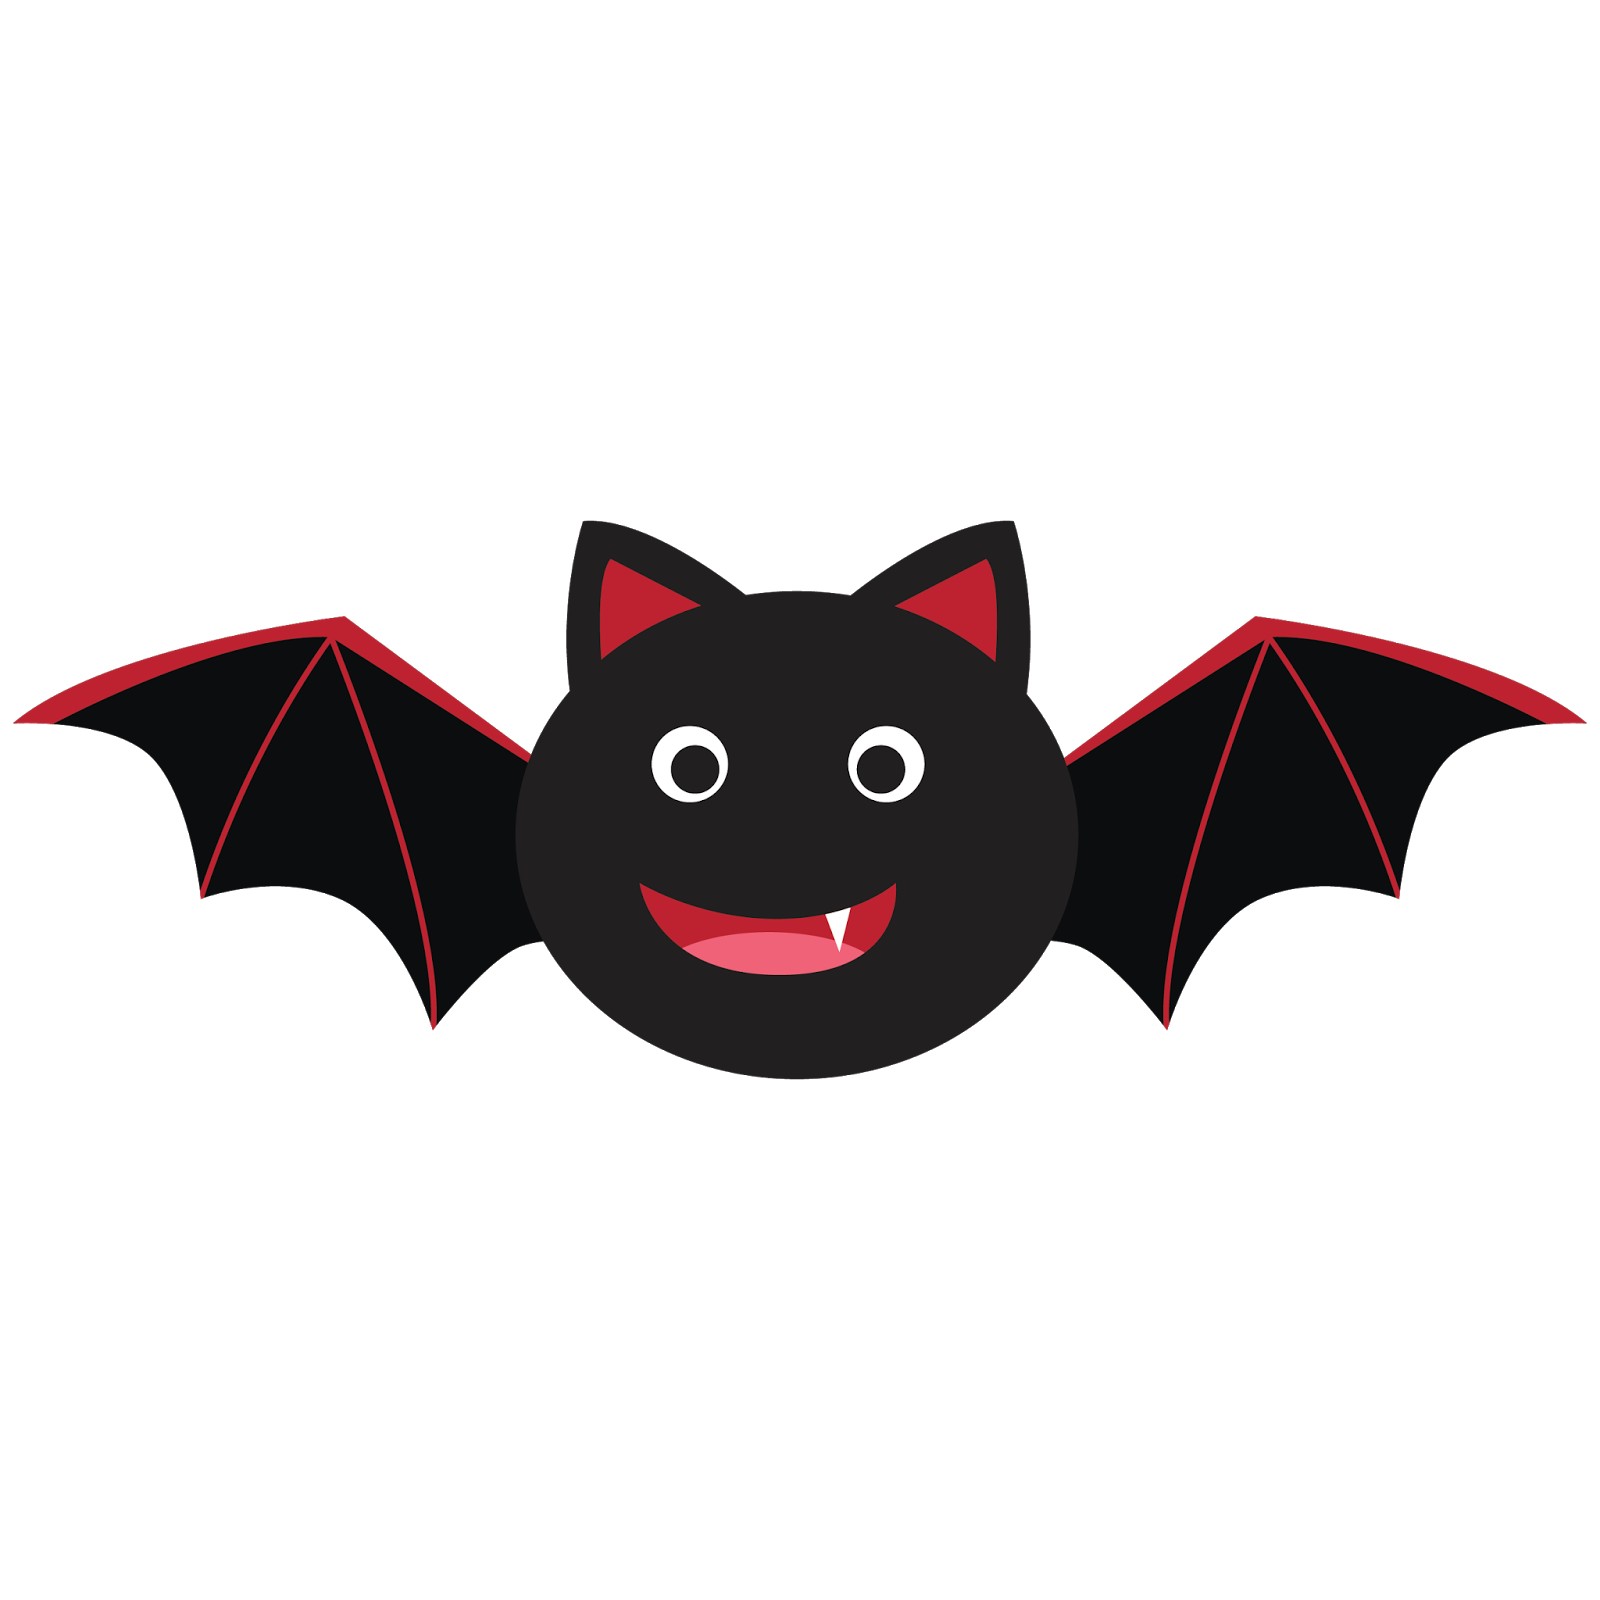 Halloween Bat Images | Free Download Clip Art | Free Clip Art | on ...